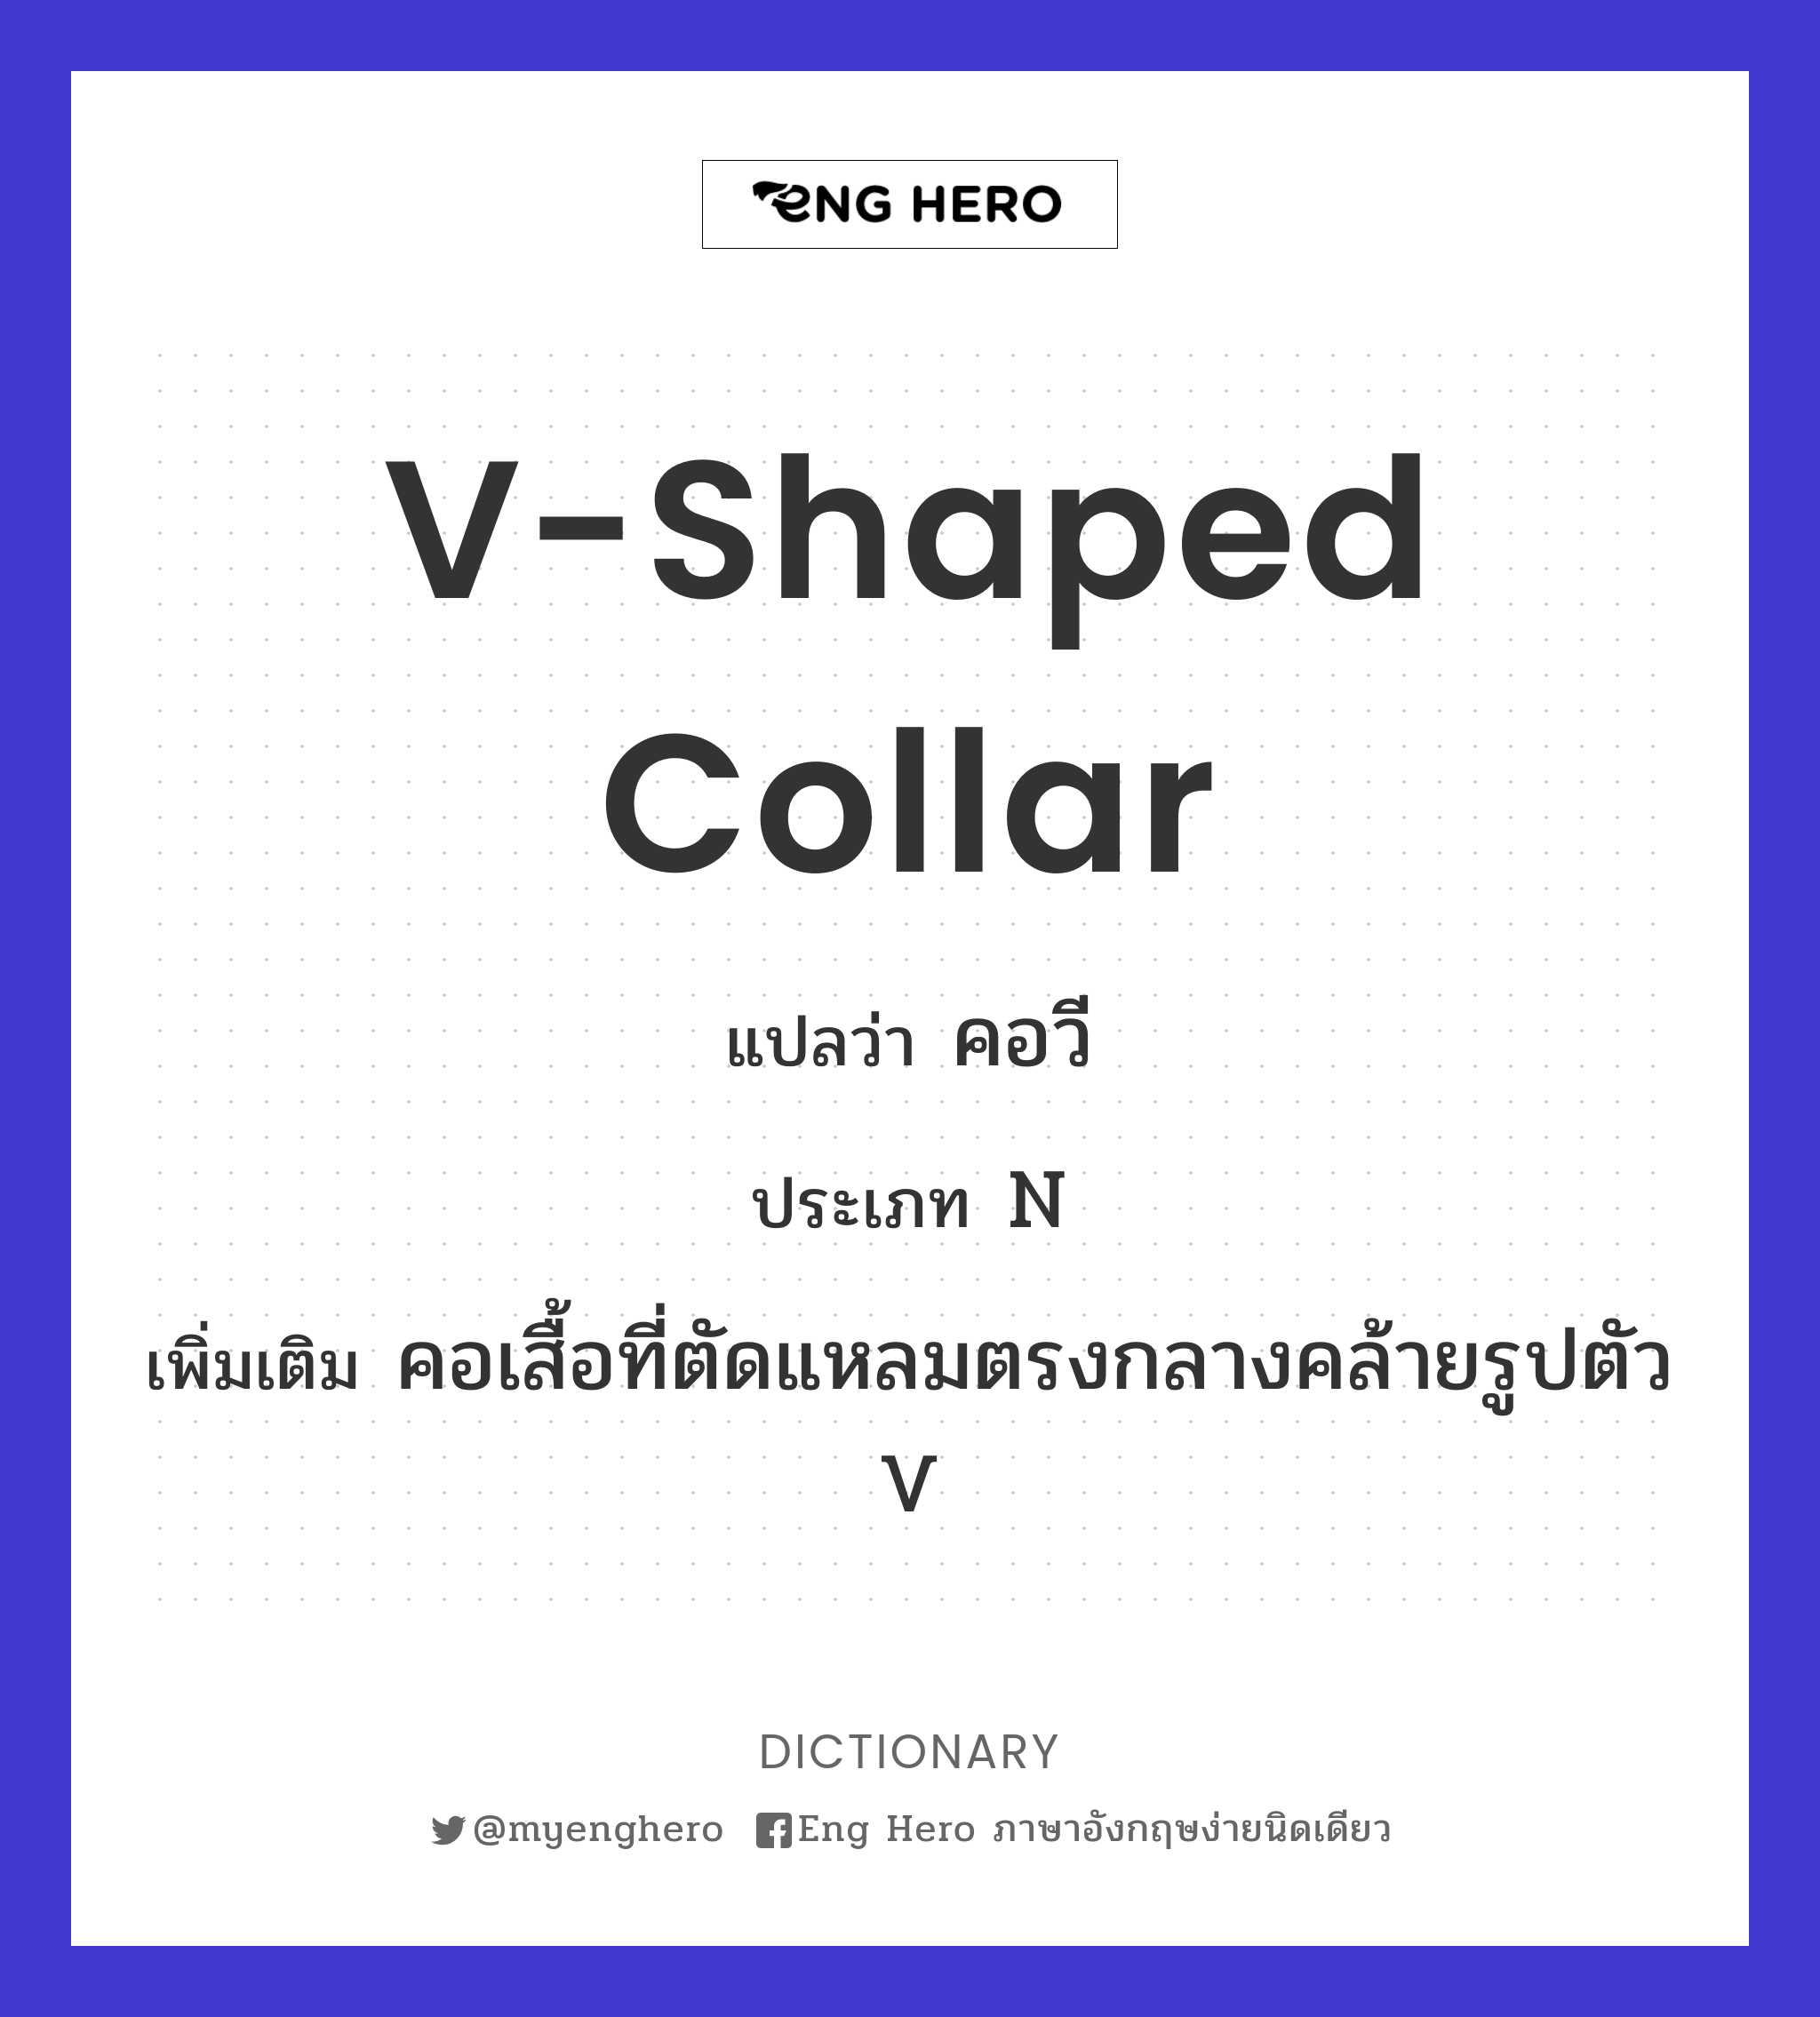 V-shaped collar